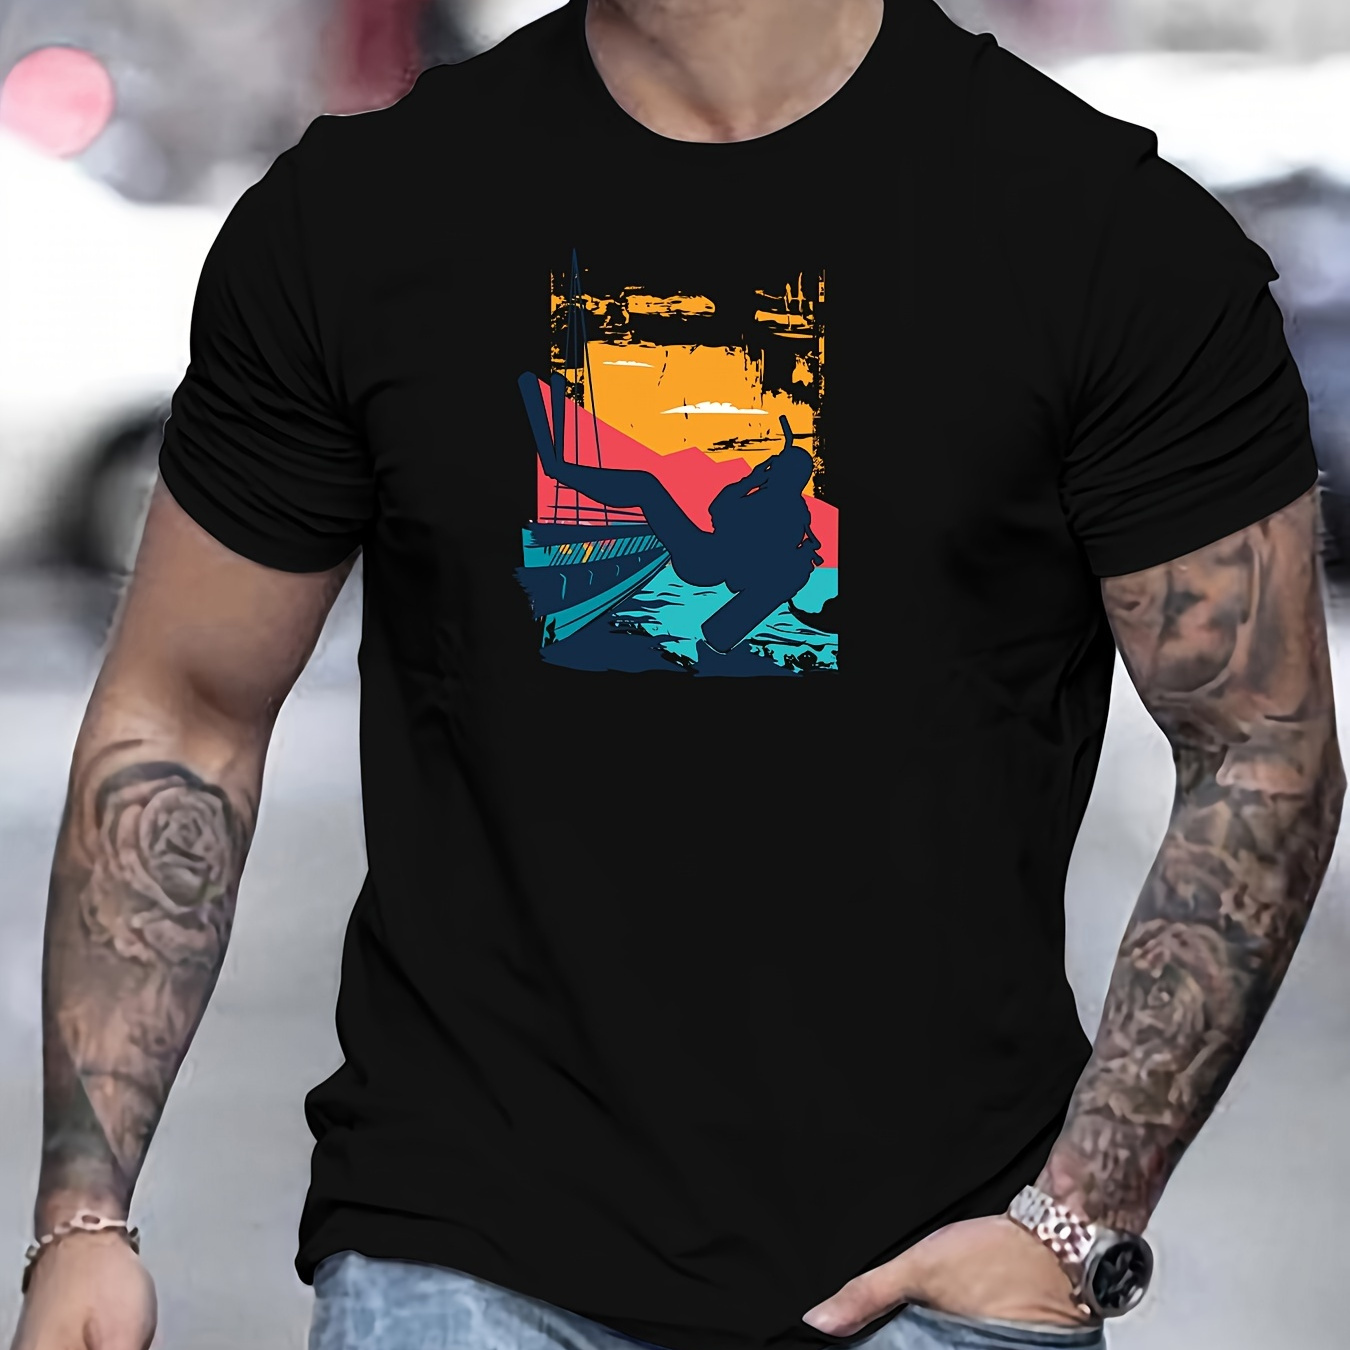 

Scuba Diving Illustration Print Men's Cotton T-shirt, Casual Short Sleeve Crew Neck Top, Men's Summer Clothing